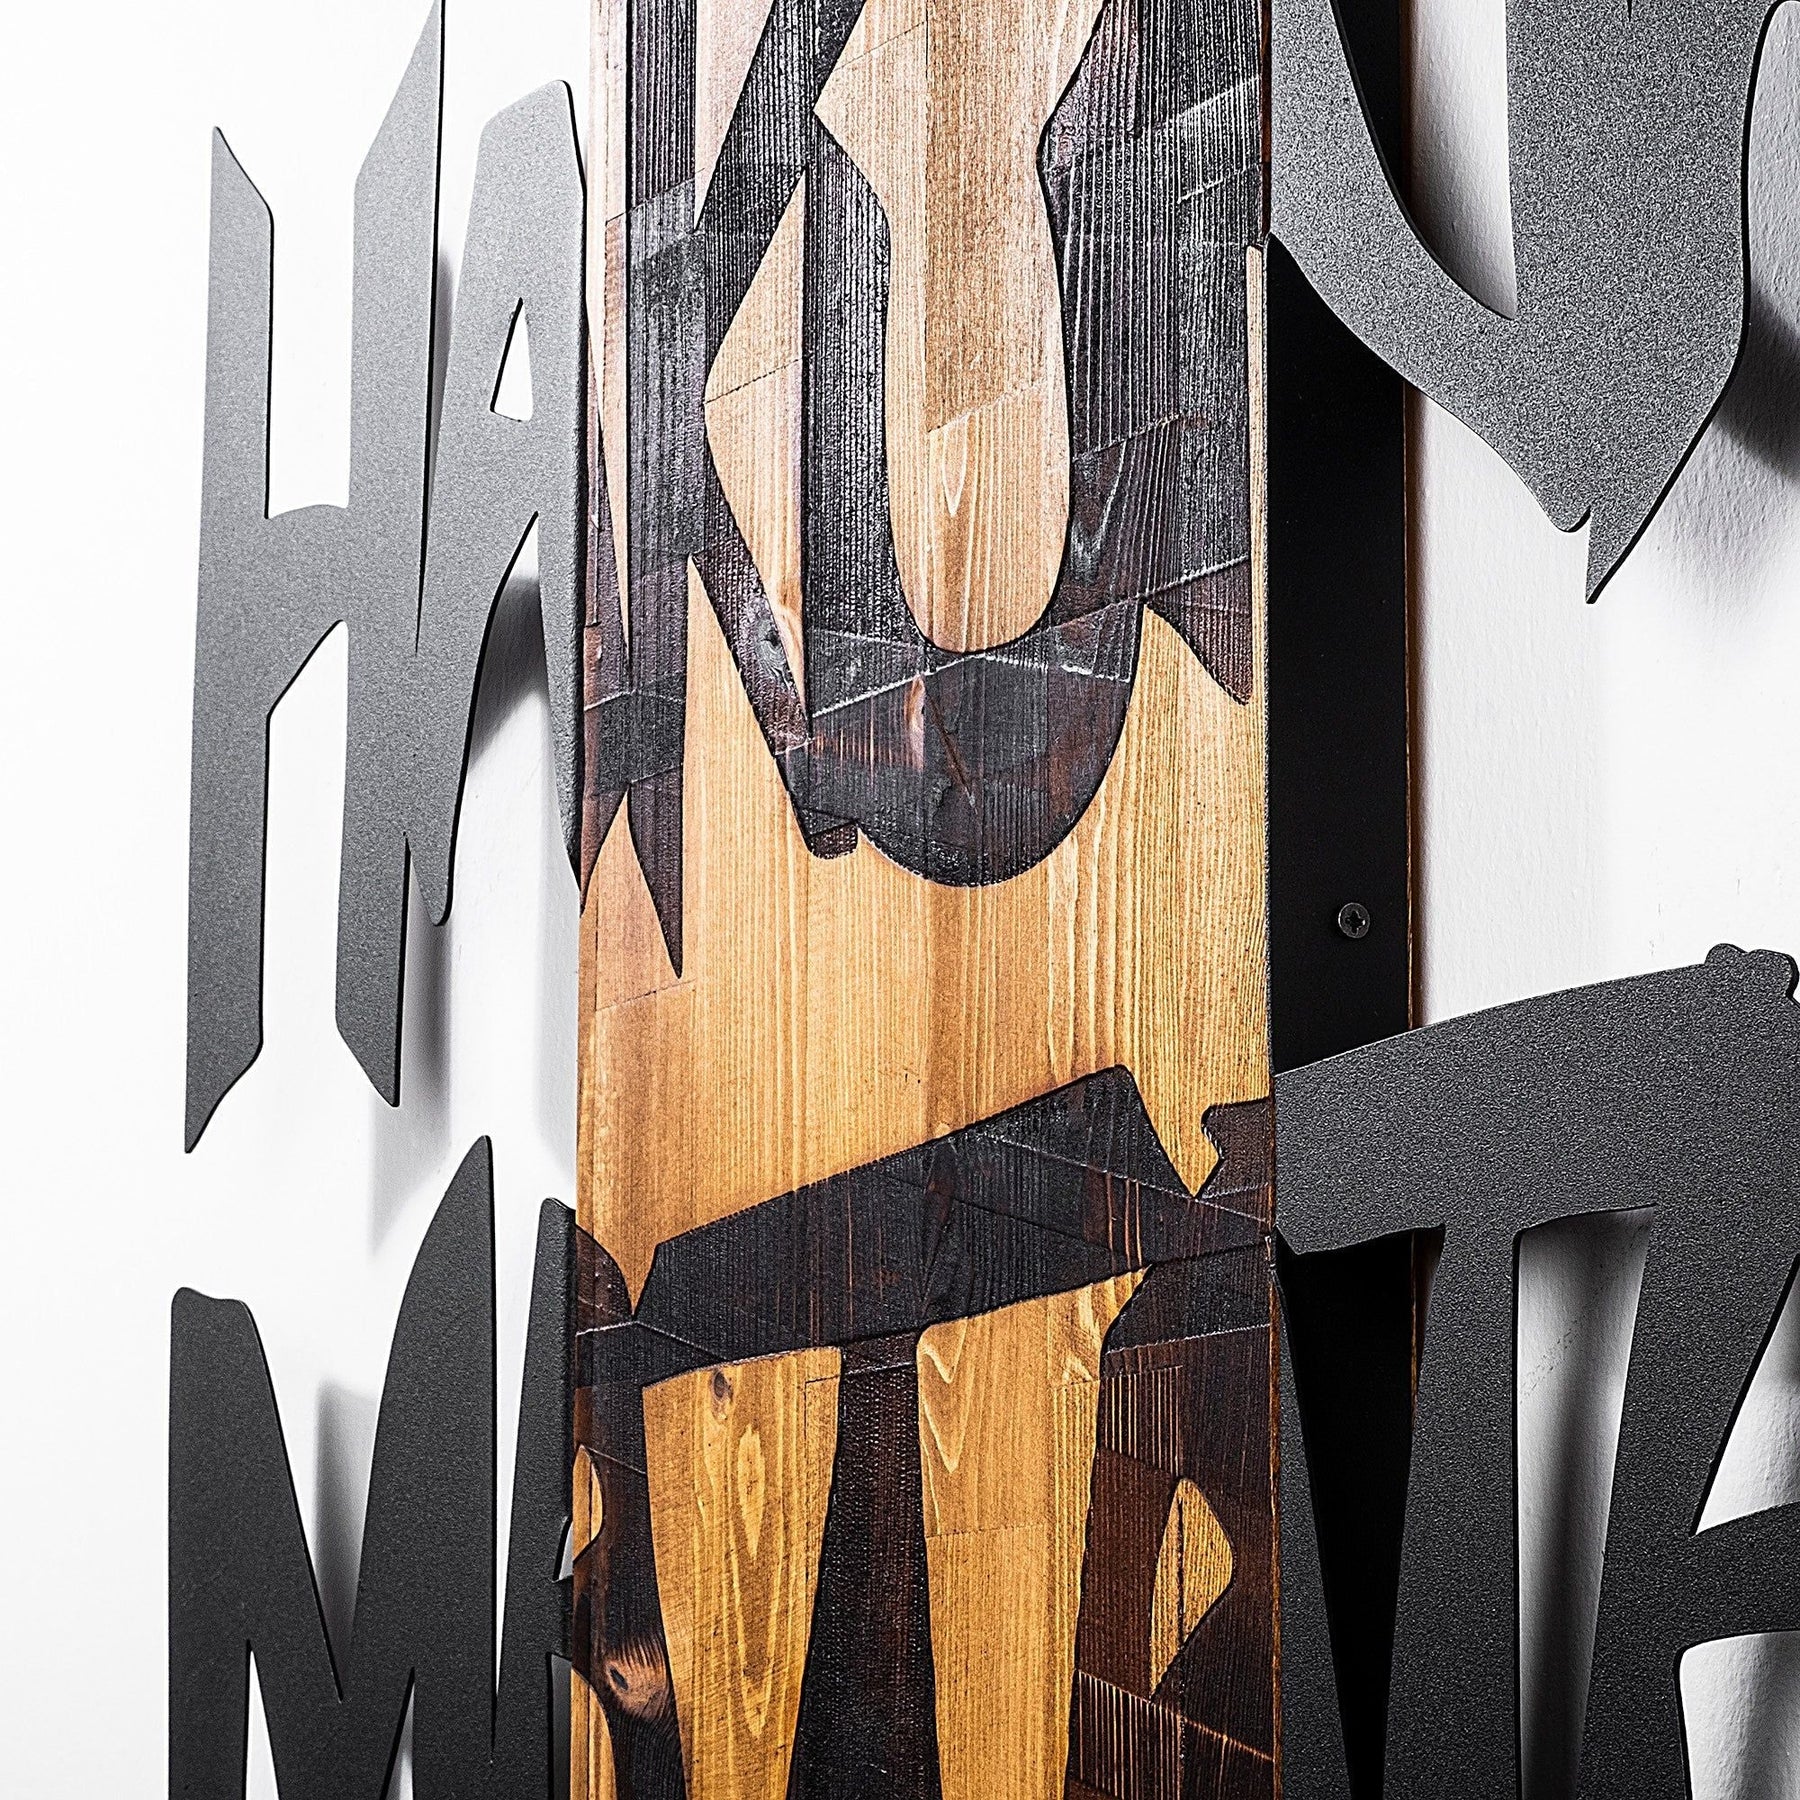 Decoratiune perete Hakuna Matata 5, negru/nuc, lemn/metal, 77x3x58 cm